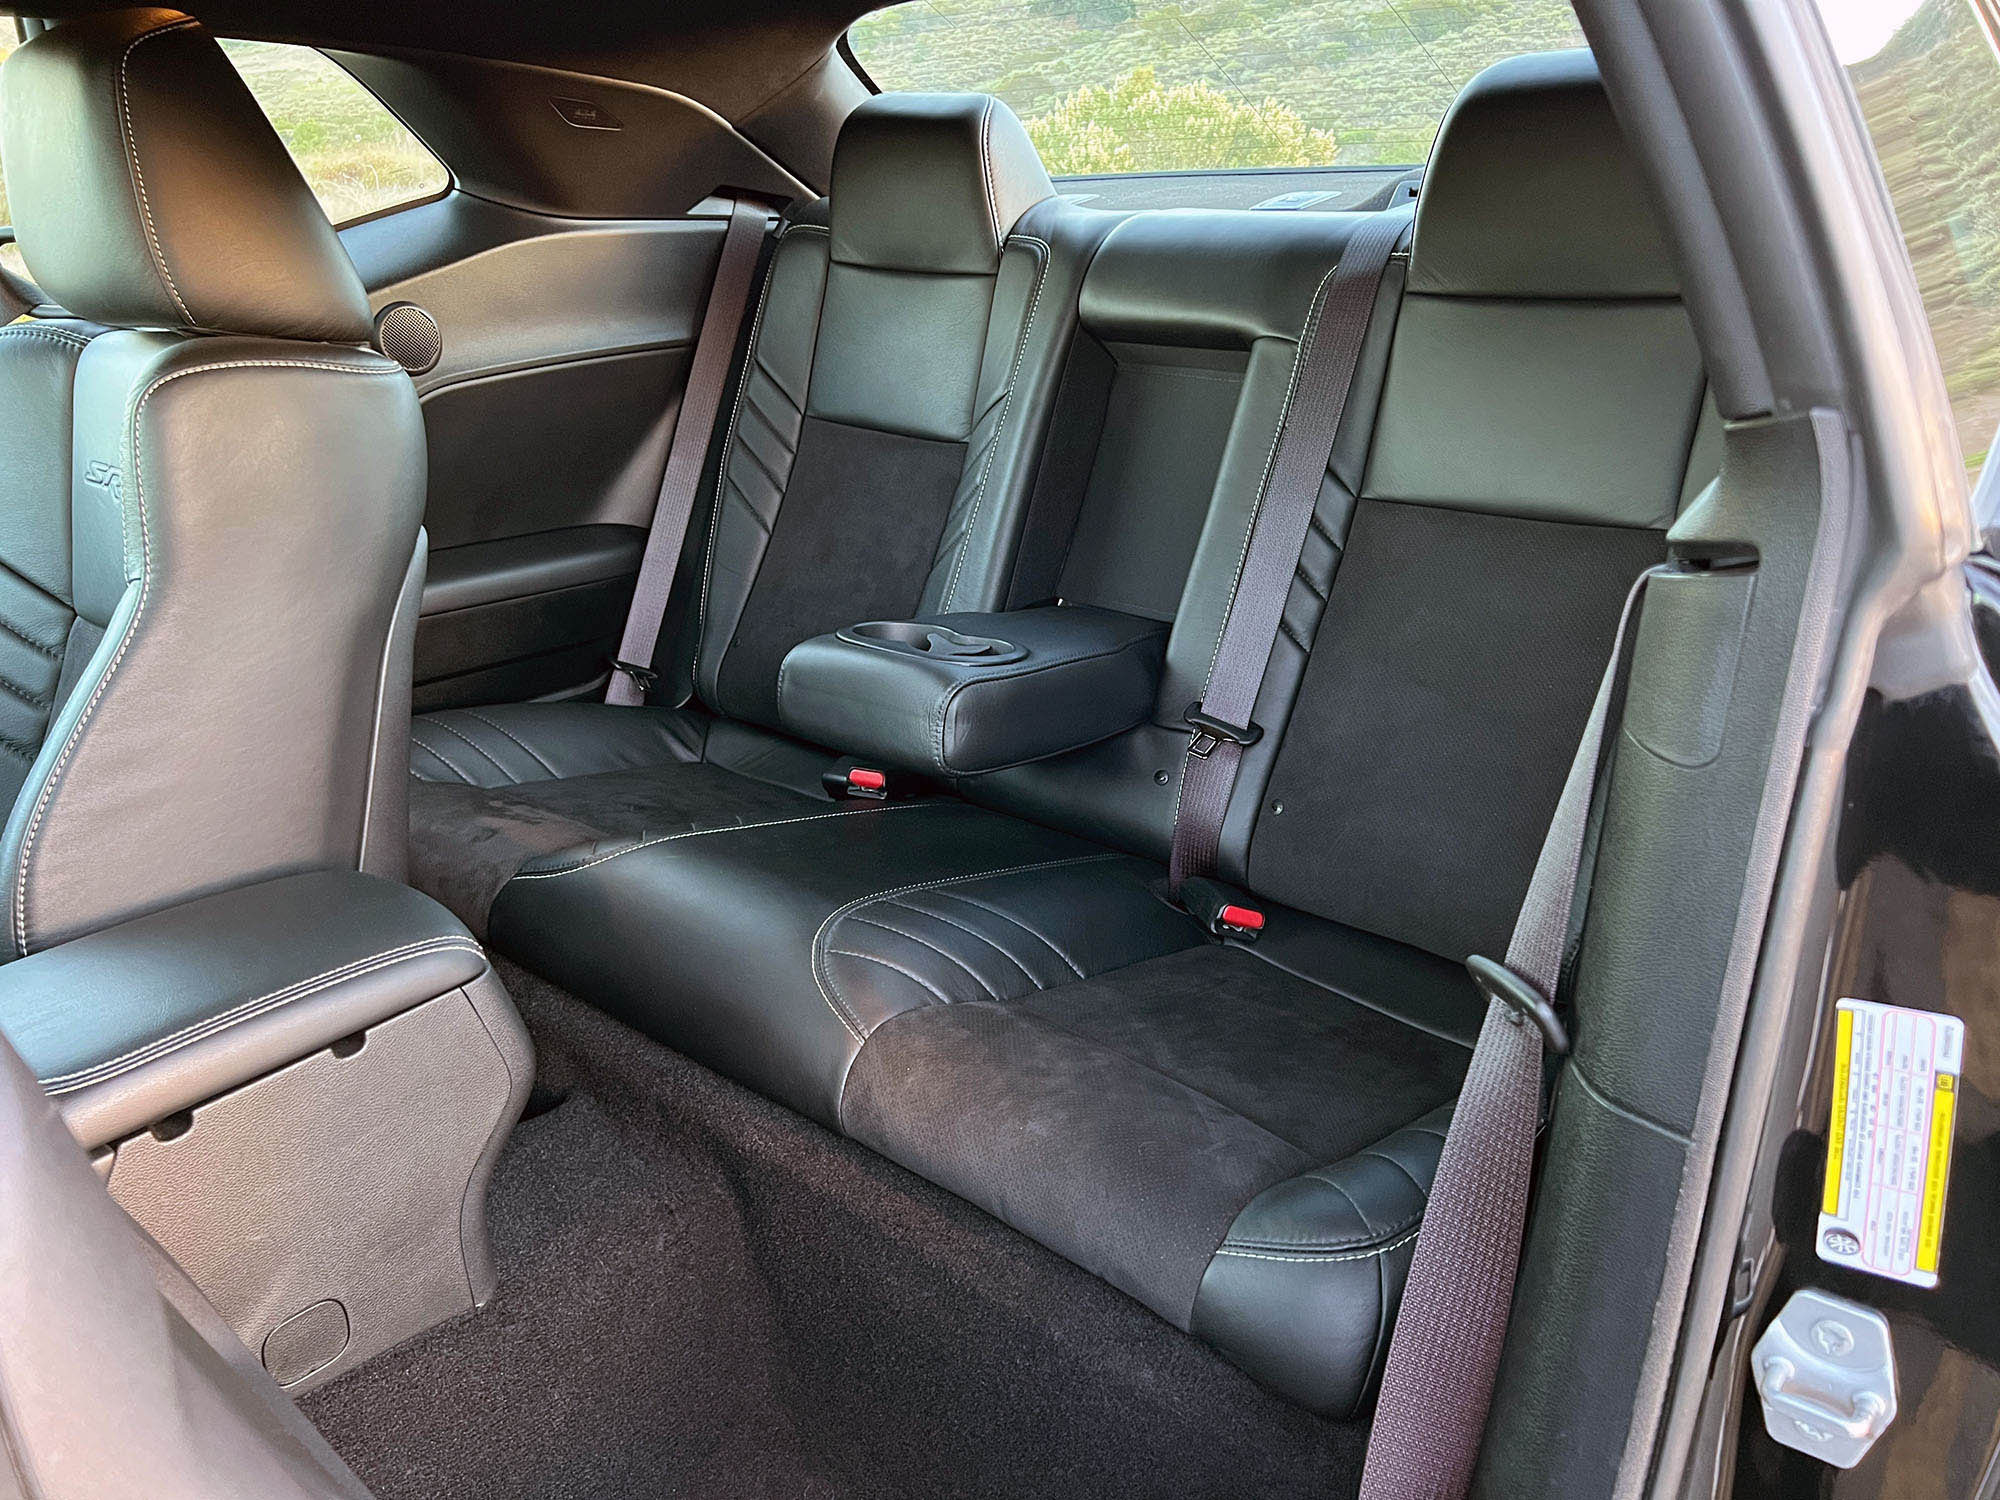 2023 Dodge Challenger Black Ghost interior, back seats.